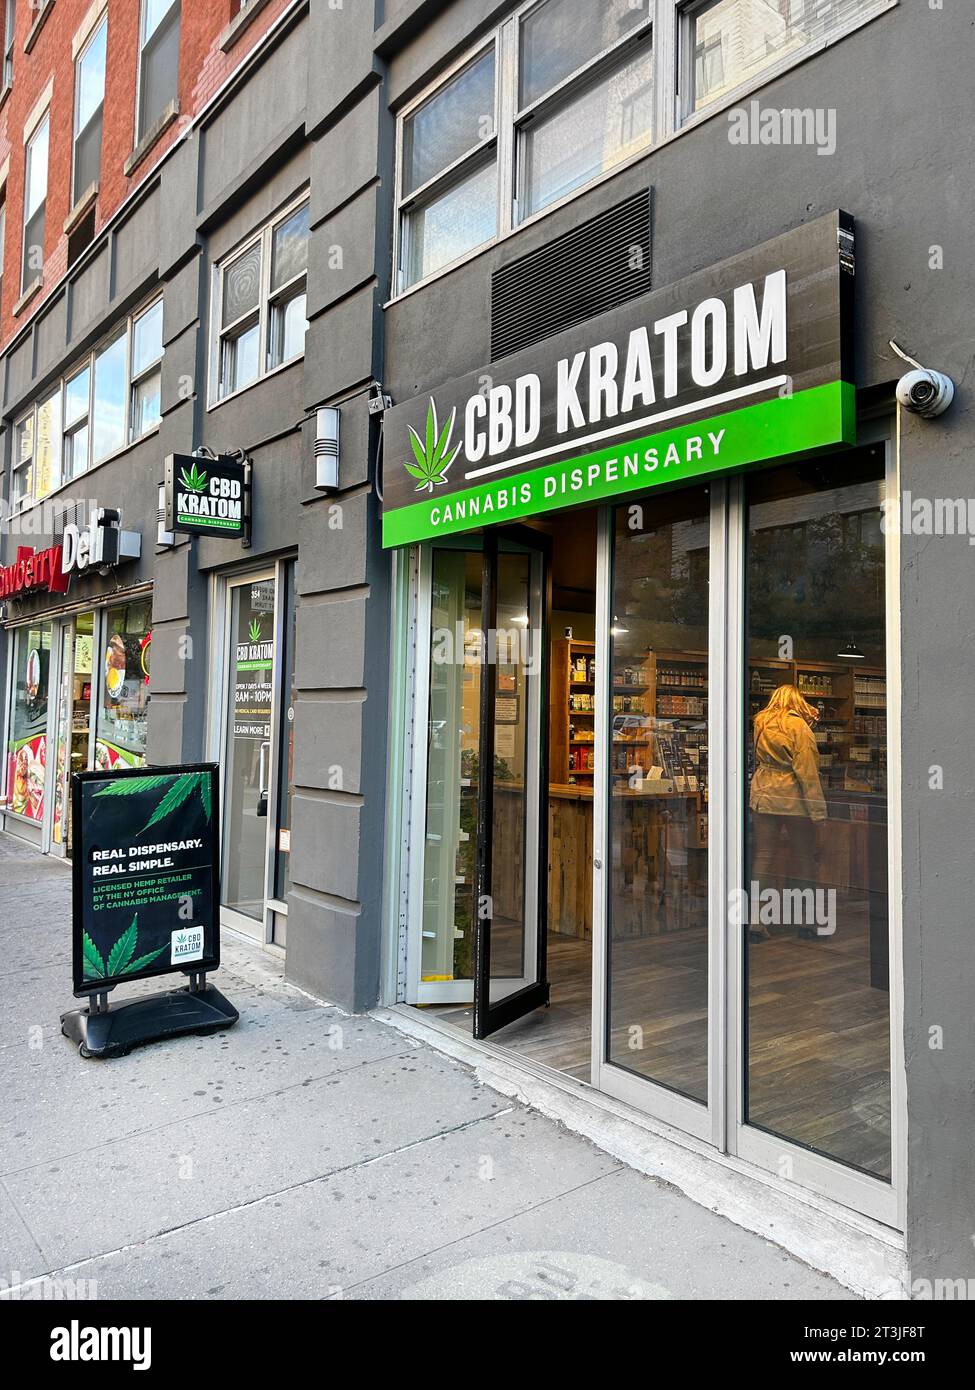 CBD Kratom Cannabis Dispensary, West 14th Street, New York City, New York, USA Stock Photo